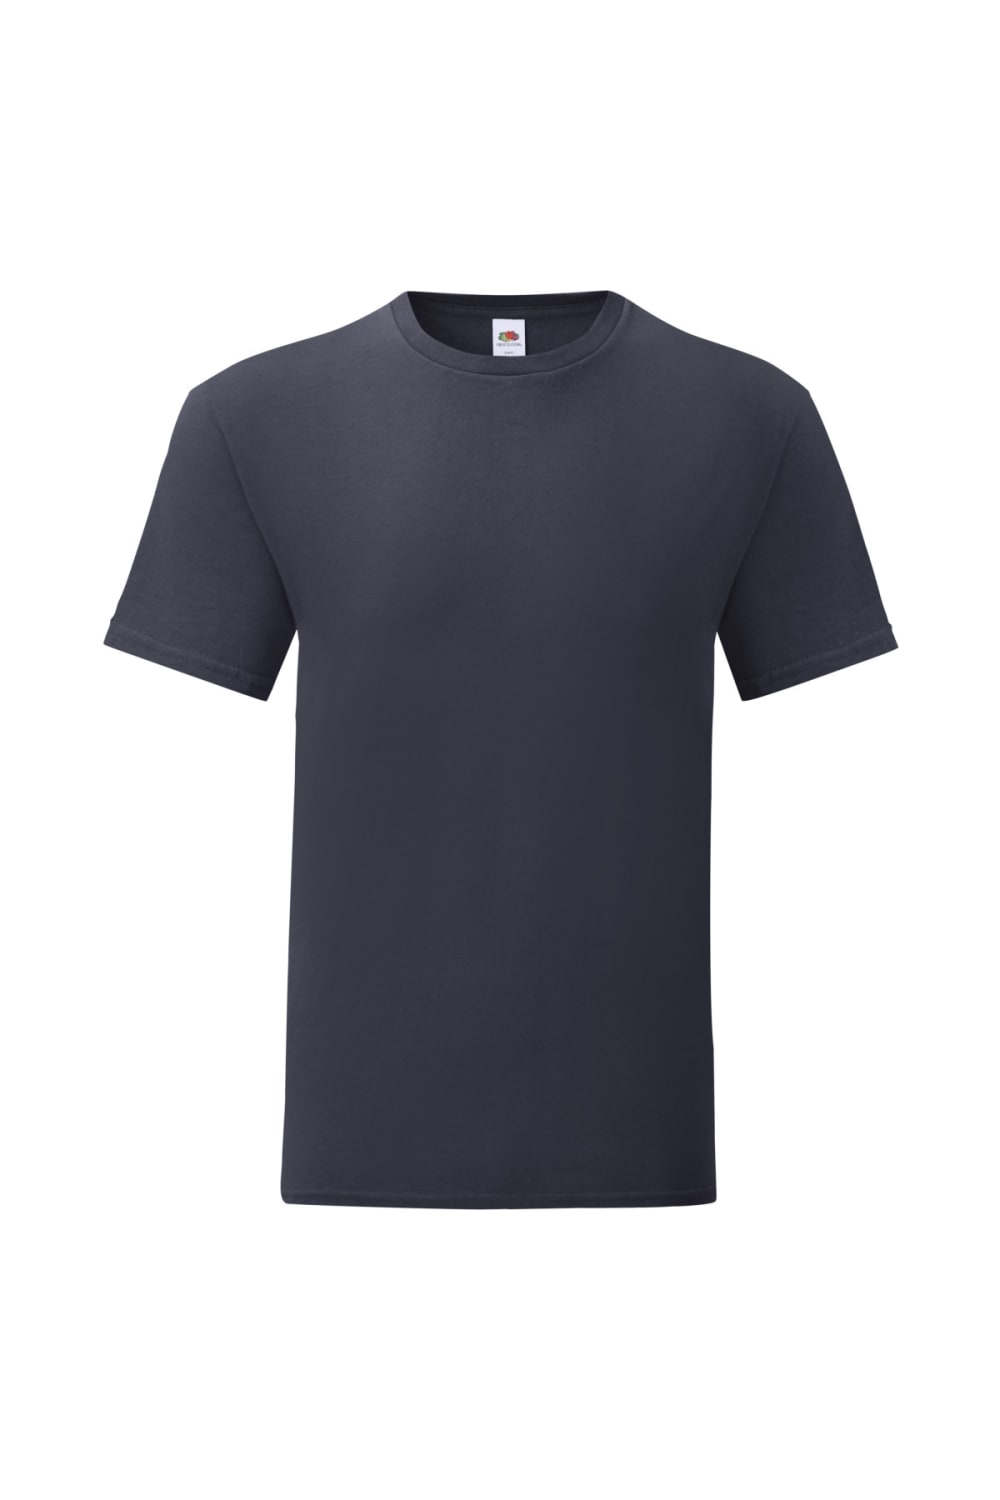 Mens Iconic T-Shirt - Deep Navy